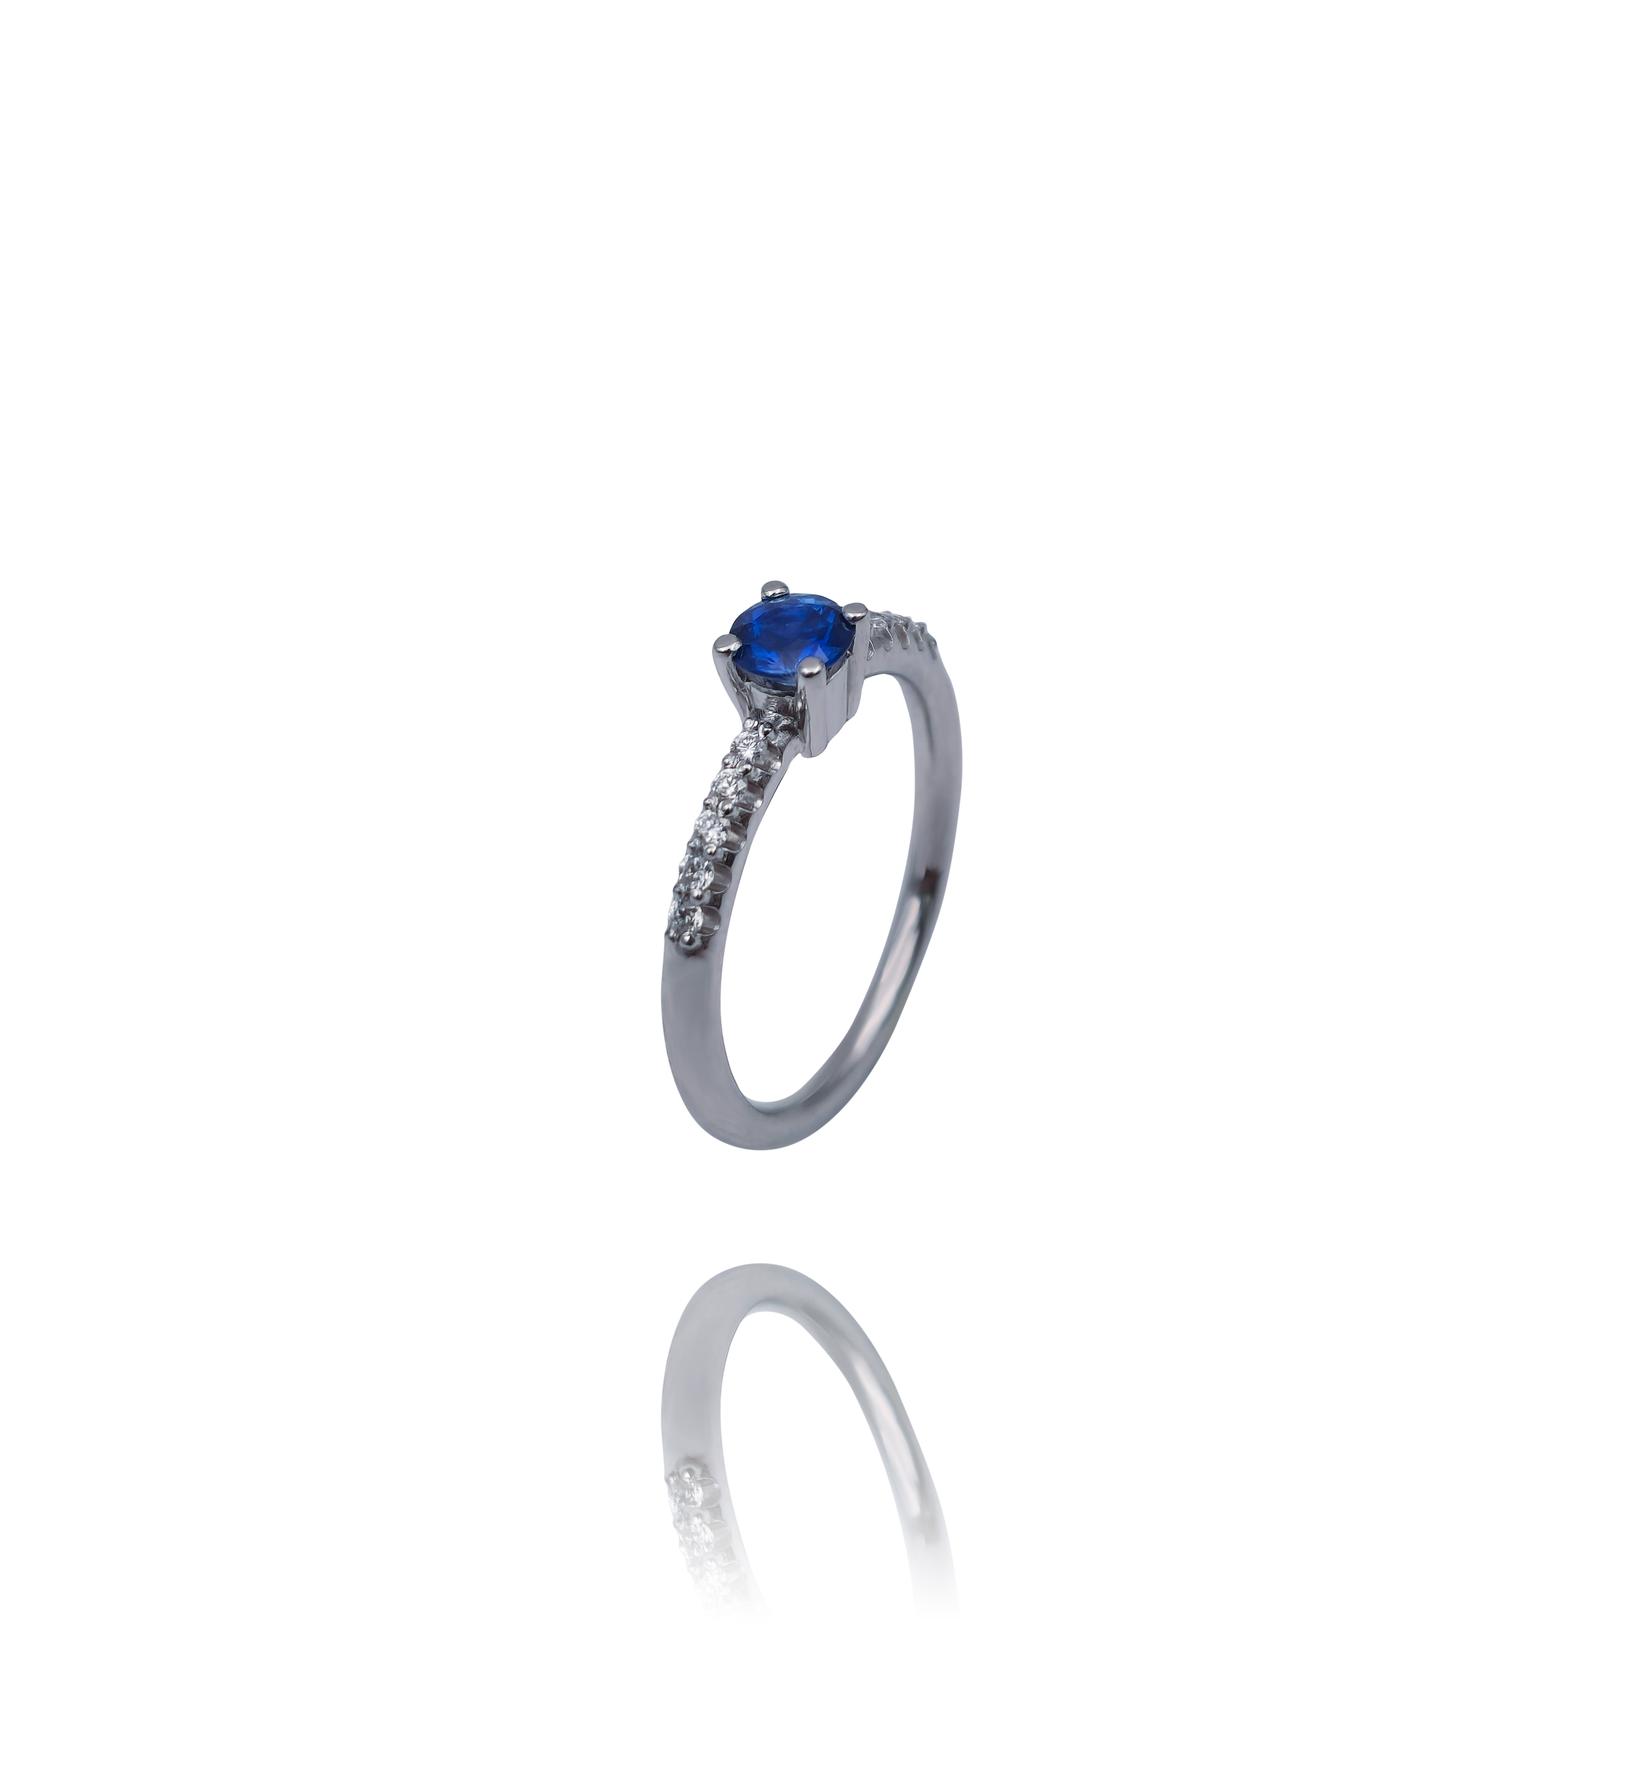 Selected image for Ženski prsten od Belog zlata sa Brilijantima i Safirom, 585, 13mm